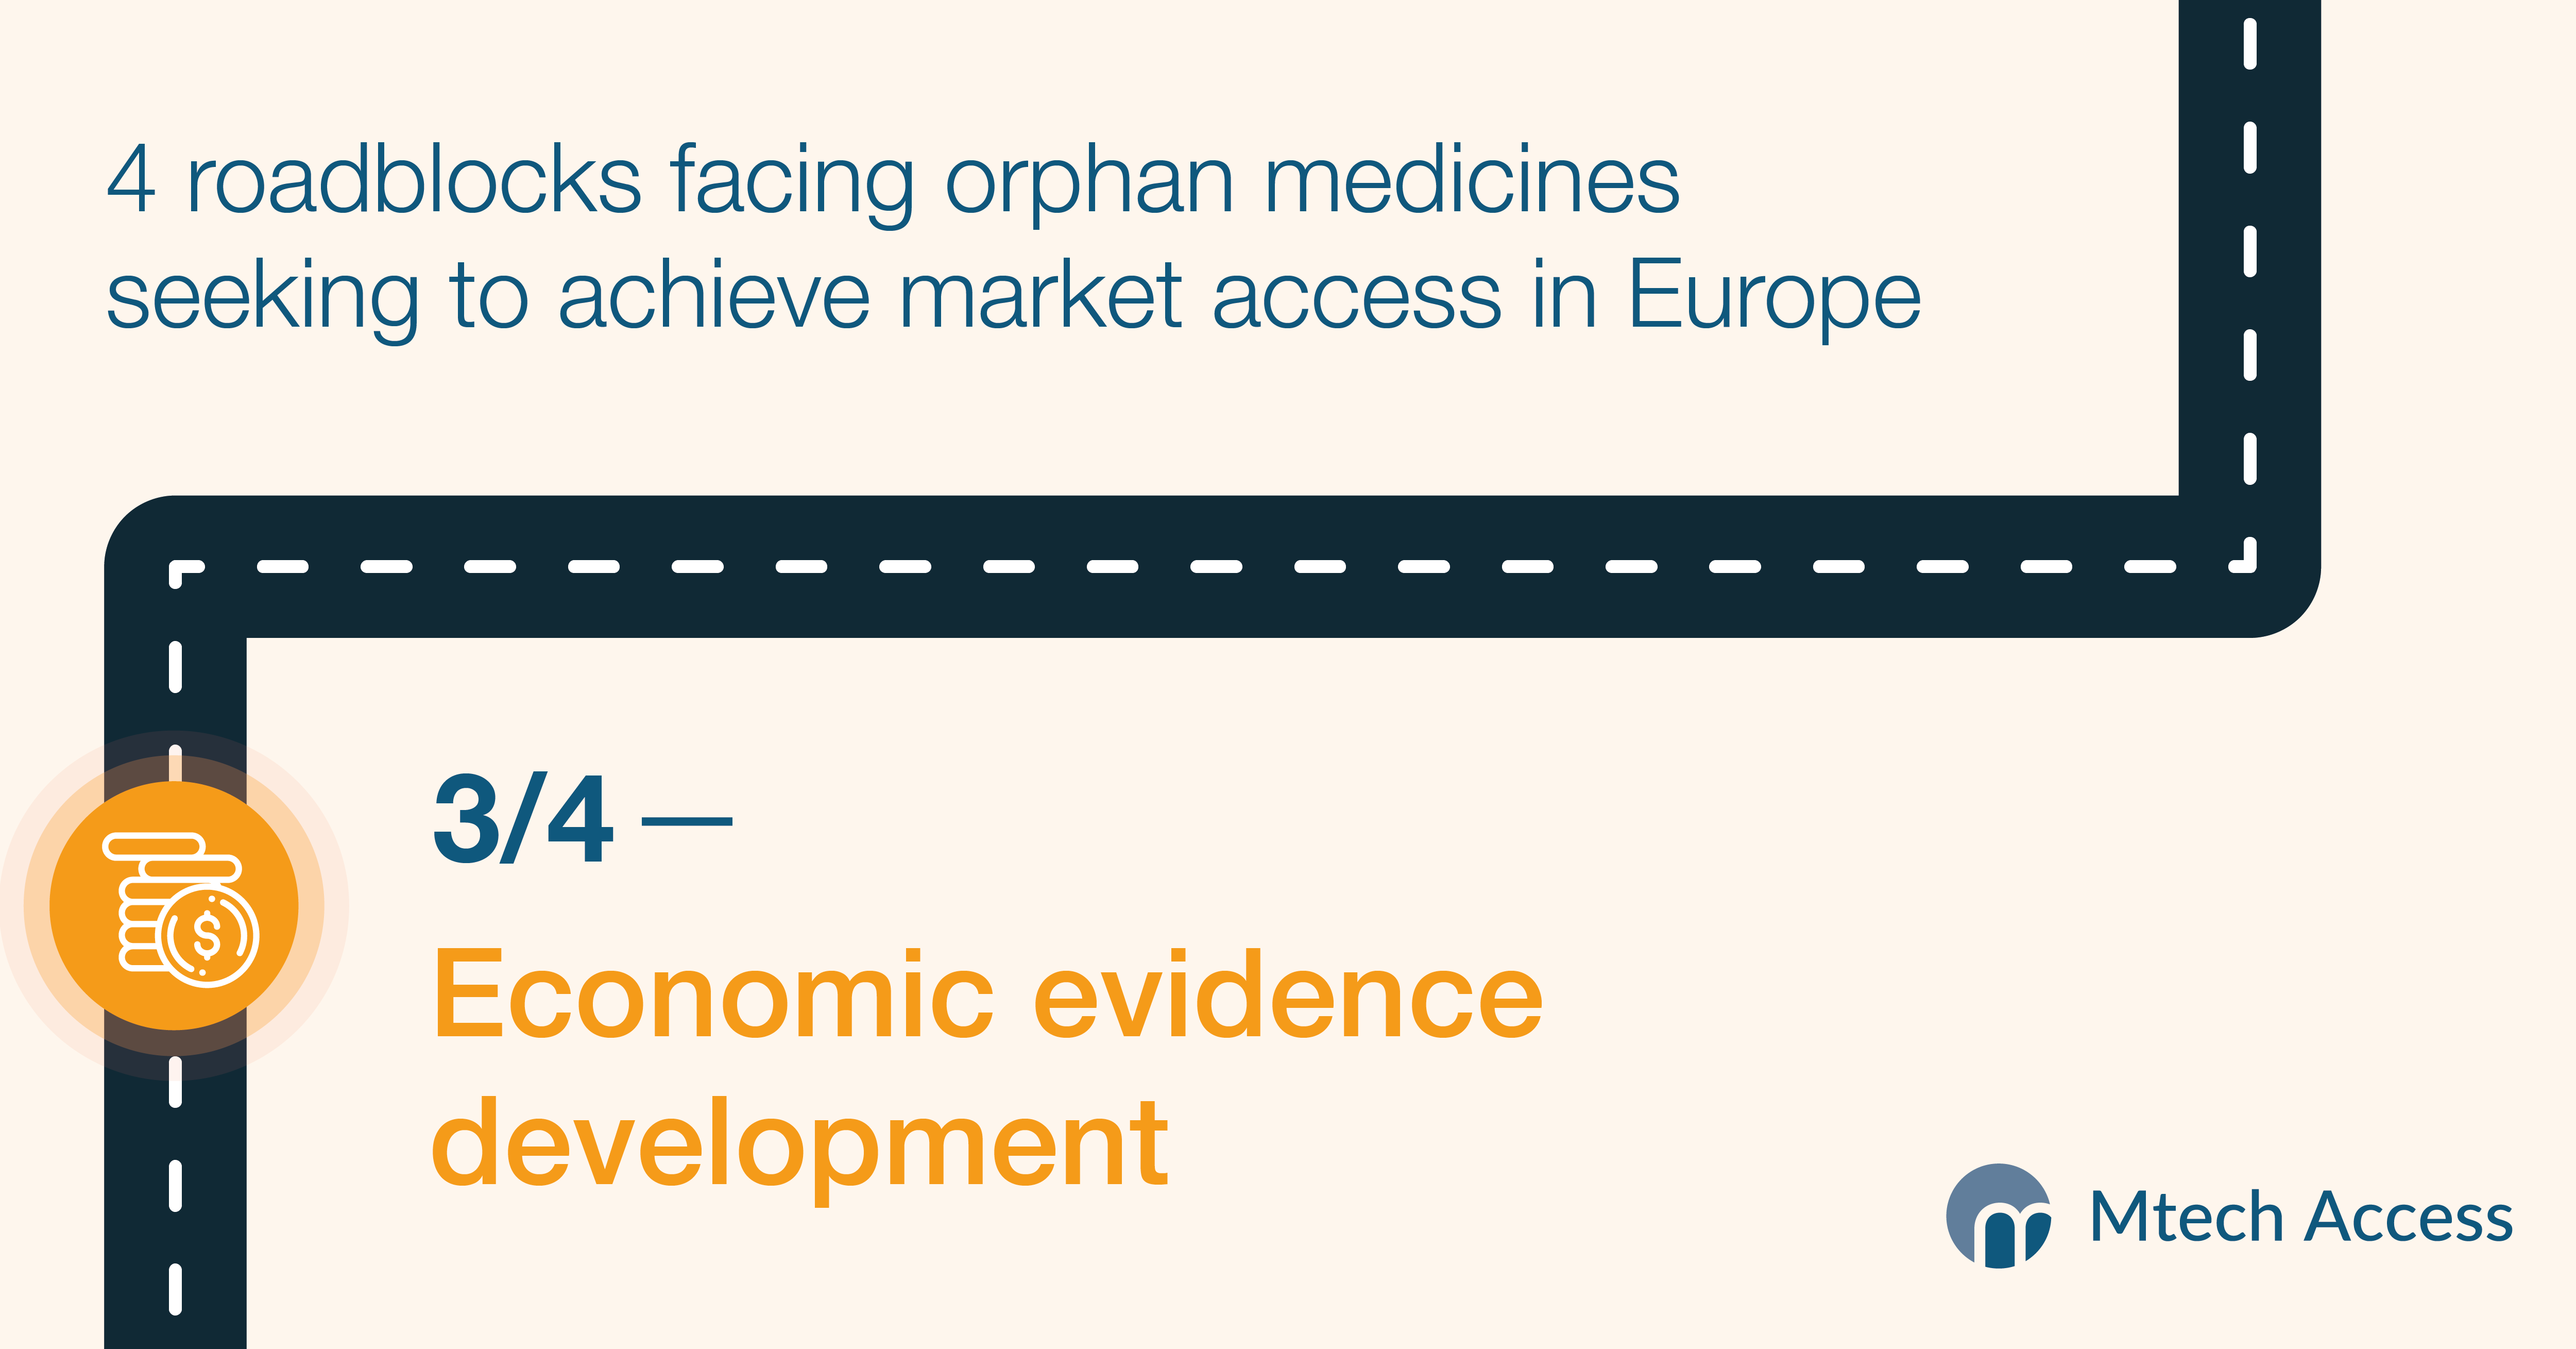 4 roadblocks facing orphan medicines seeking to achieve market access in Europe - Economic evidence development